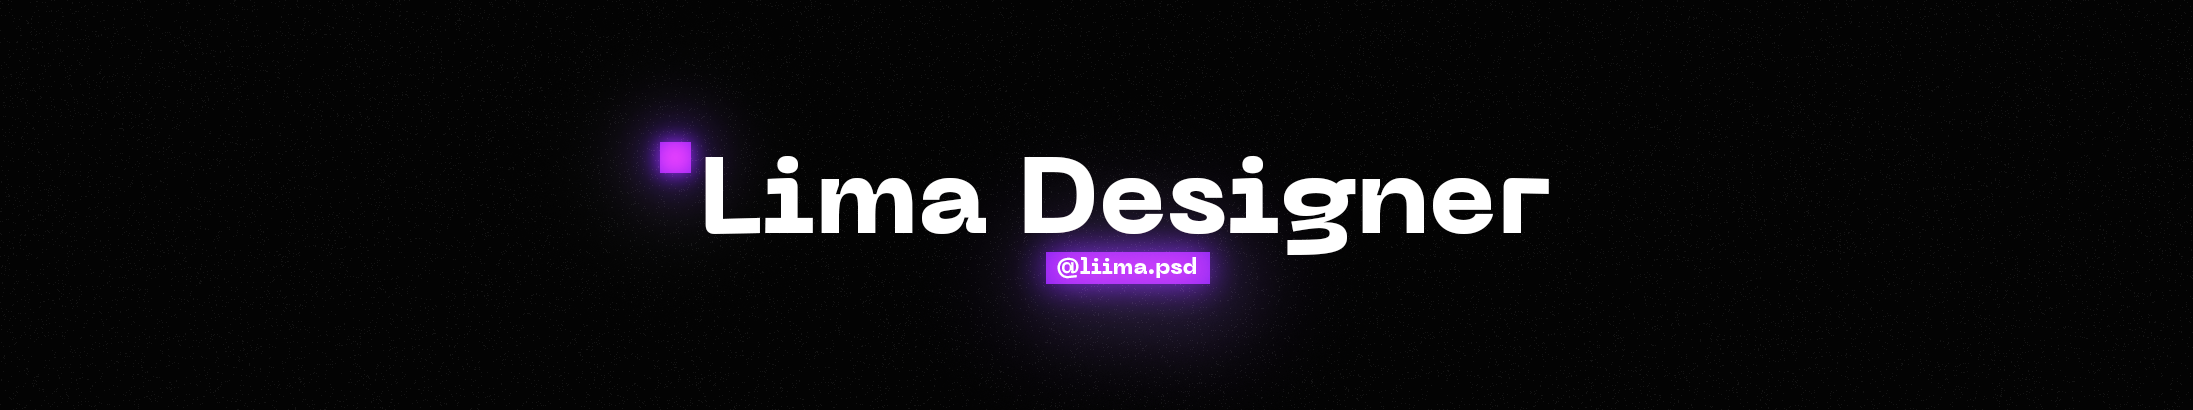 Lima Designer's profile banner